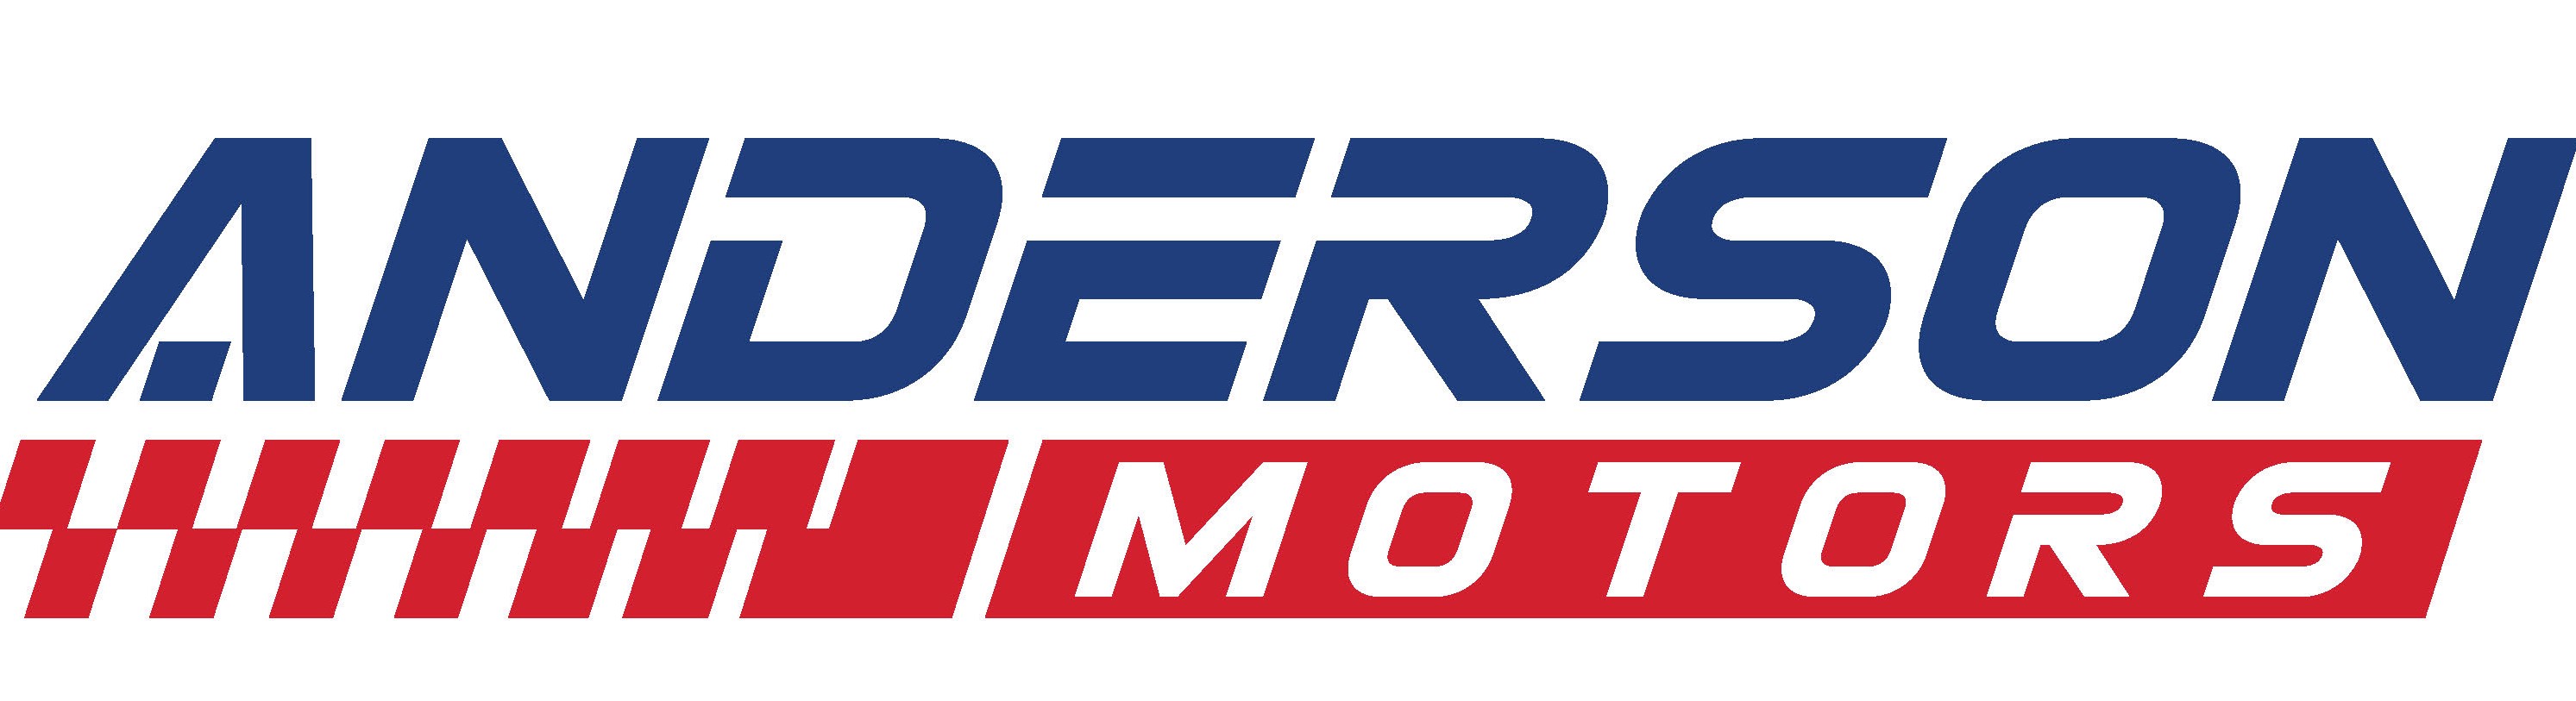 ANDERSON MOTORS LLC